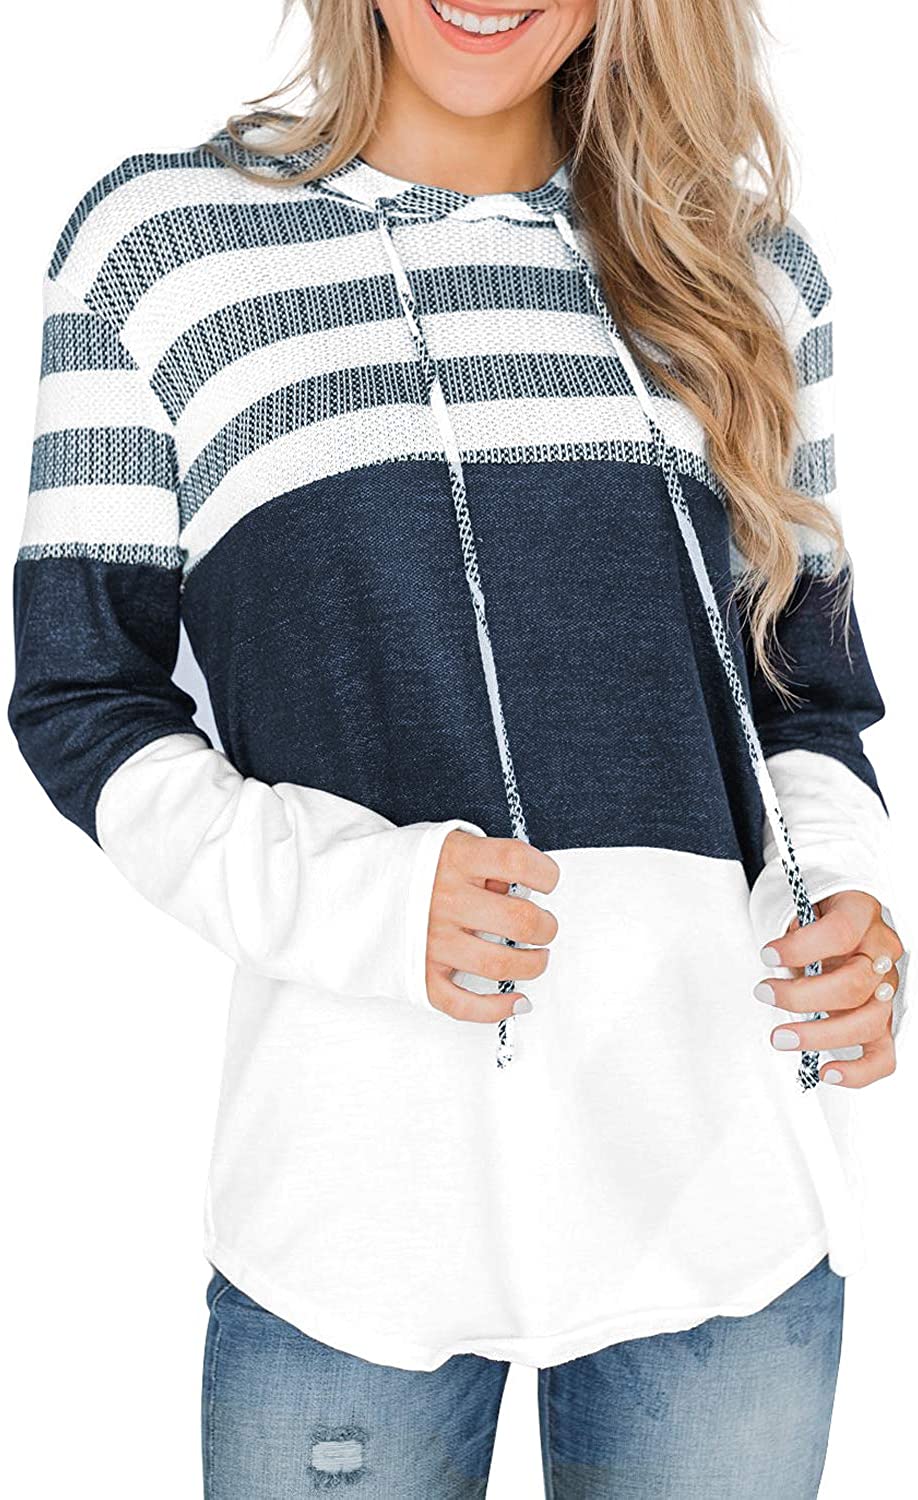 EVALESS Women Sweatshirts and Hoodies Long Sleeve Drawstring Sweatshirts Color Block Striped Pullover Top